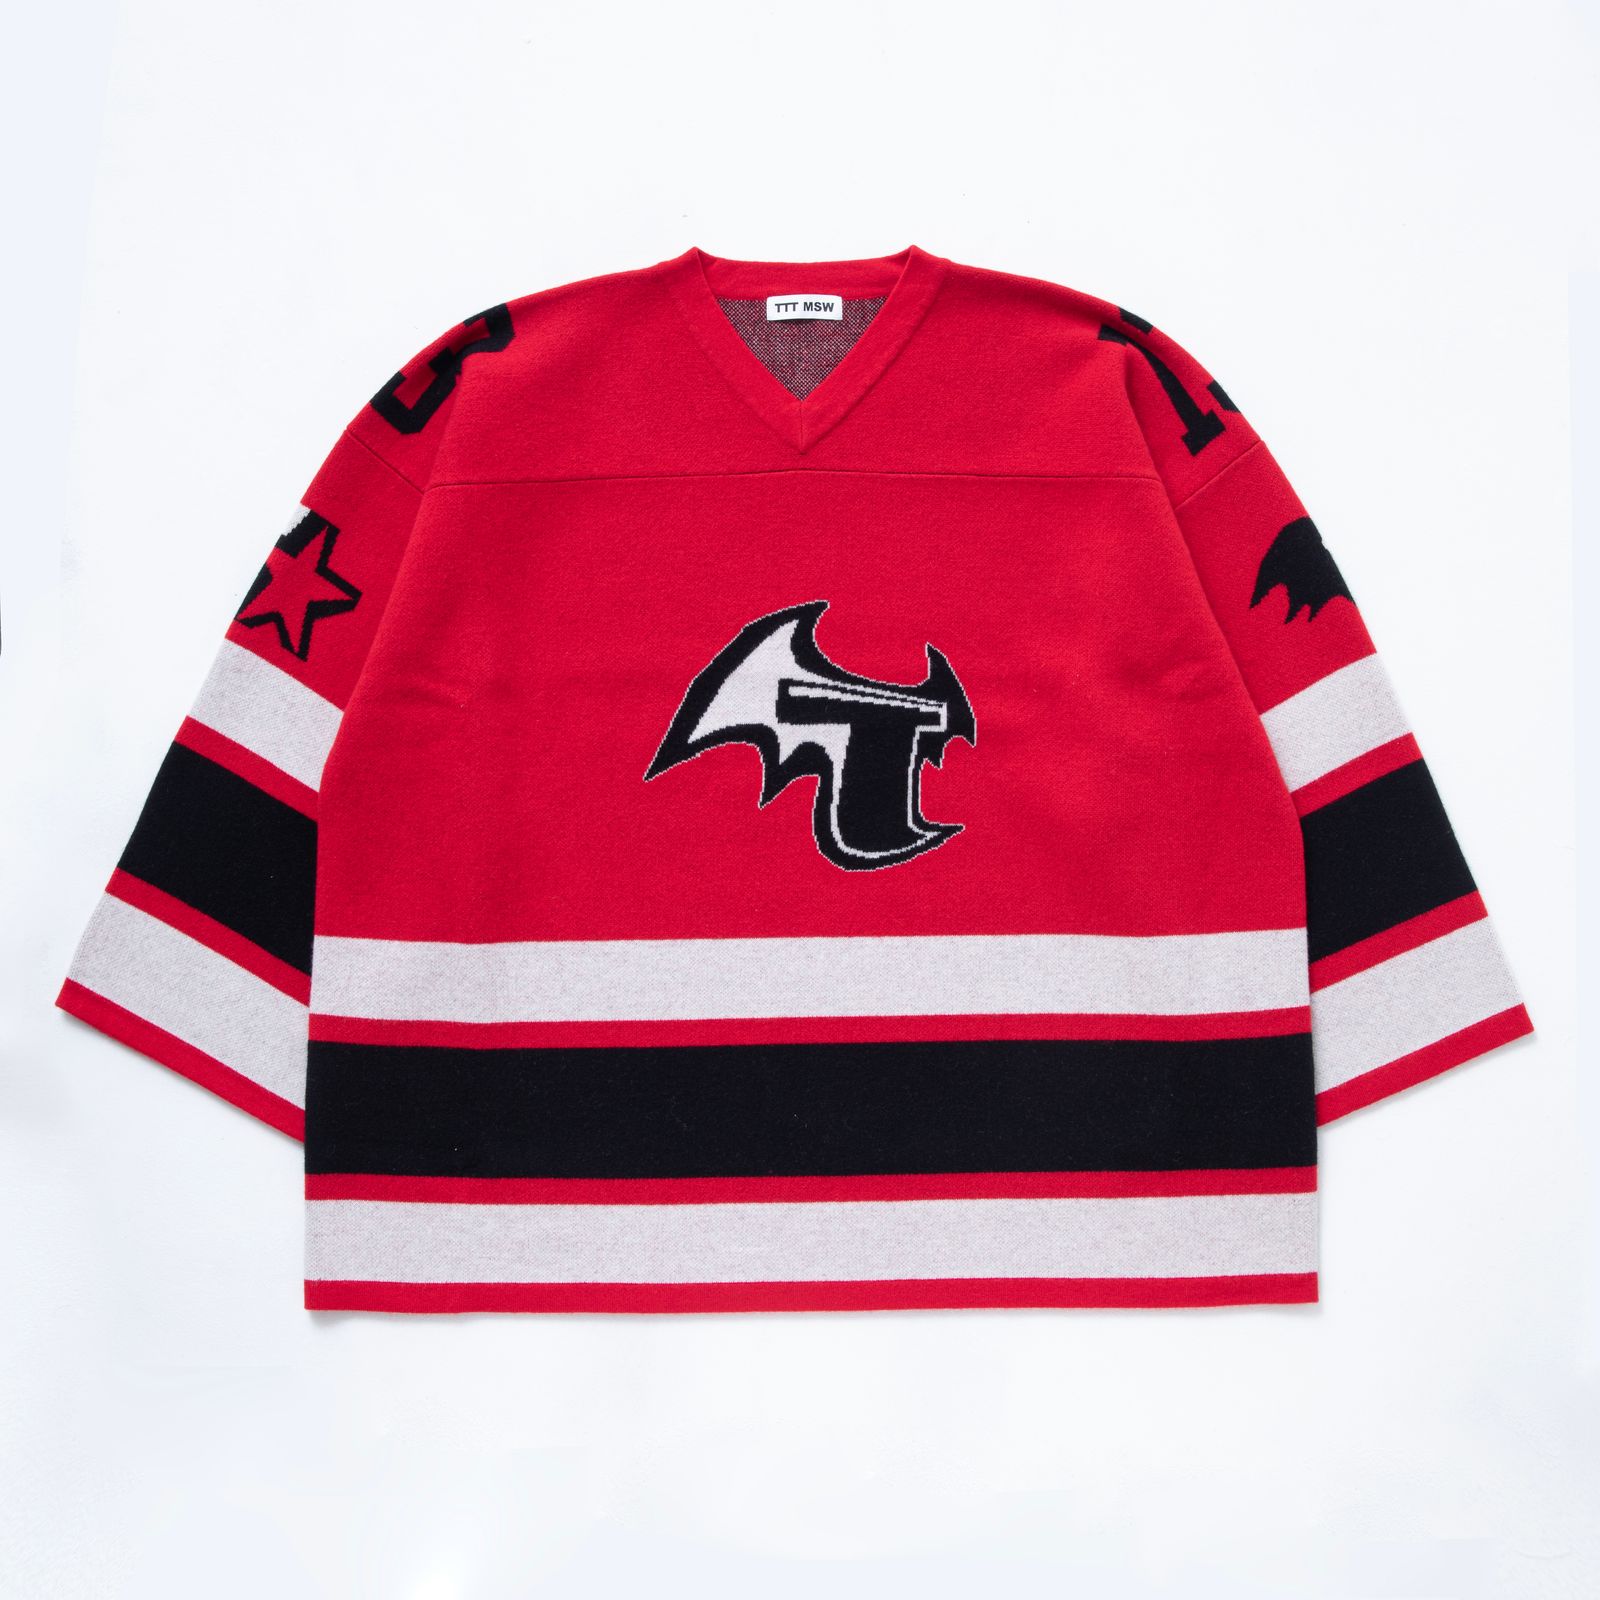 TTT MSW - 【残りわずか】Hockey Knit Game Shirt | ACRMTSM ONLINE STORE